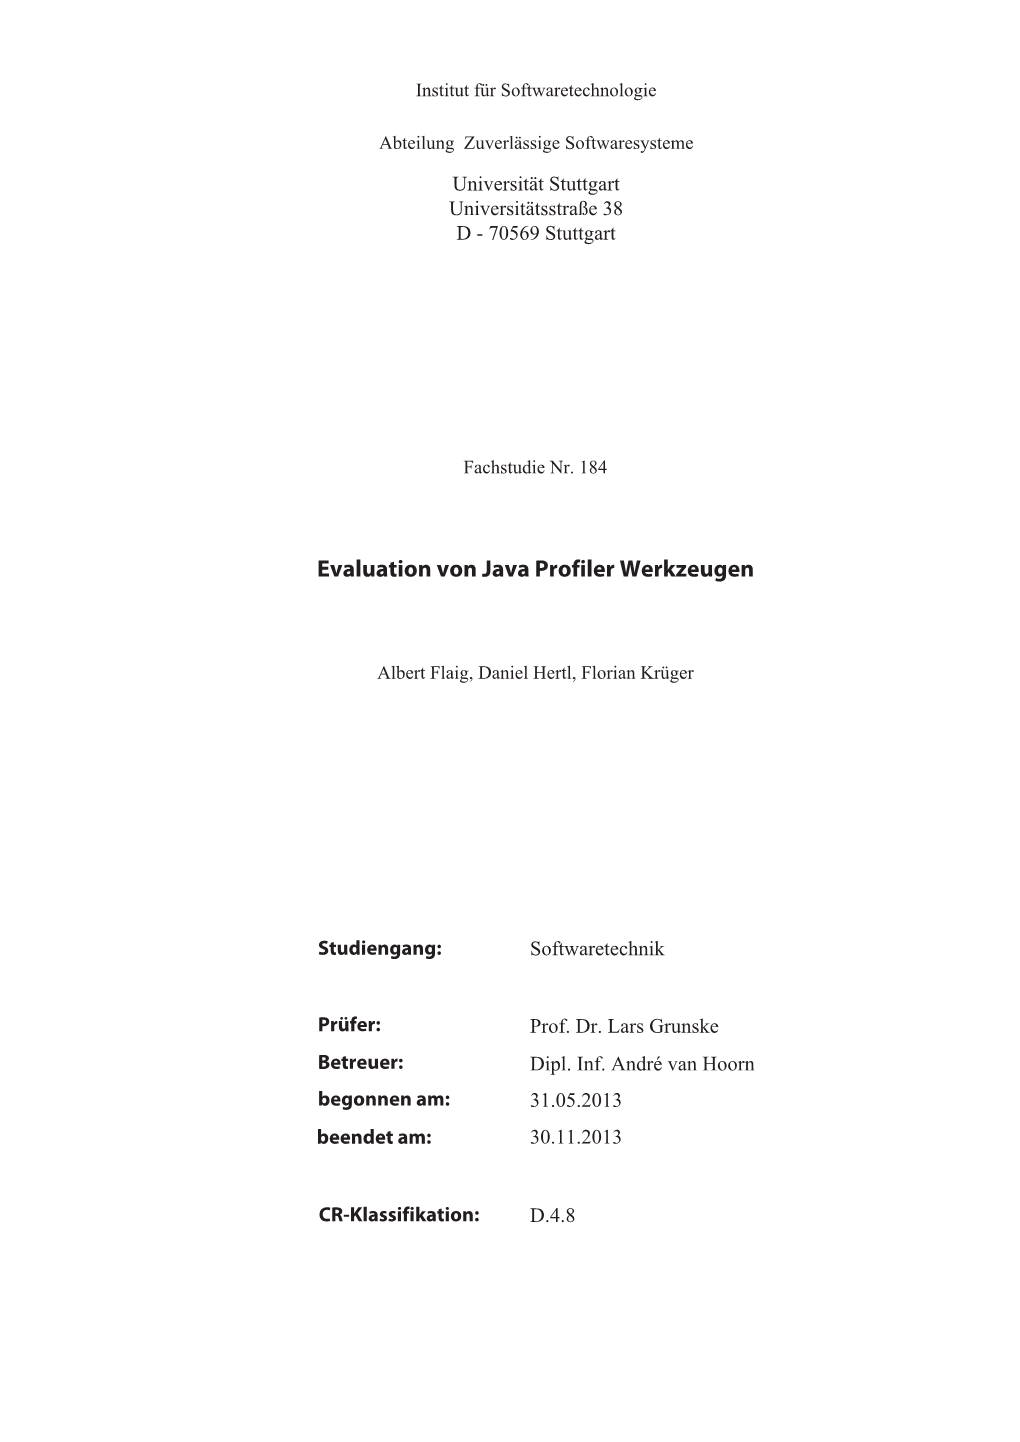 Evaluation of Java Profiler Tools